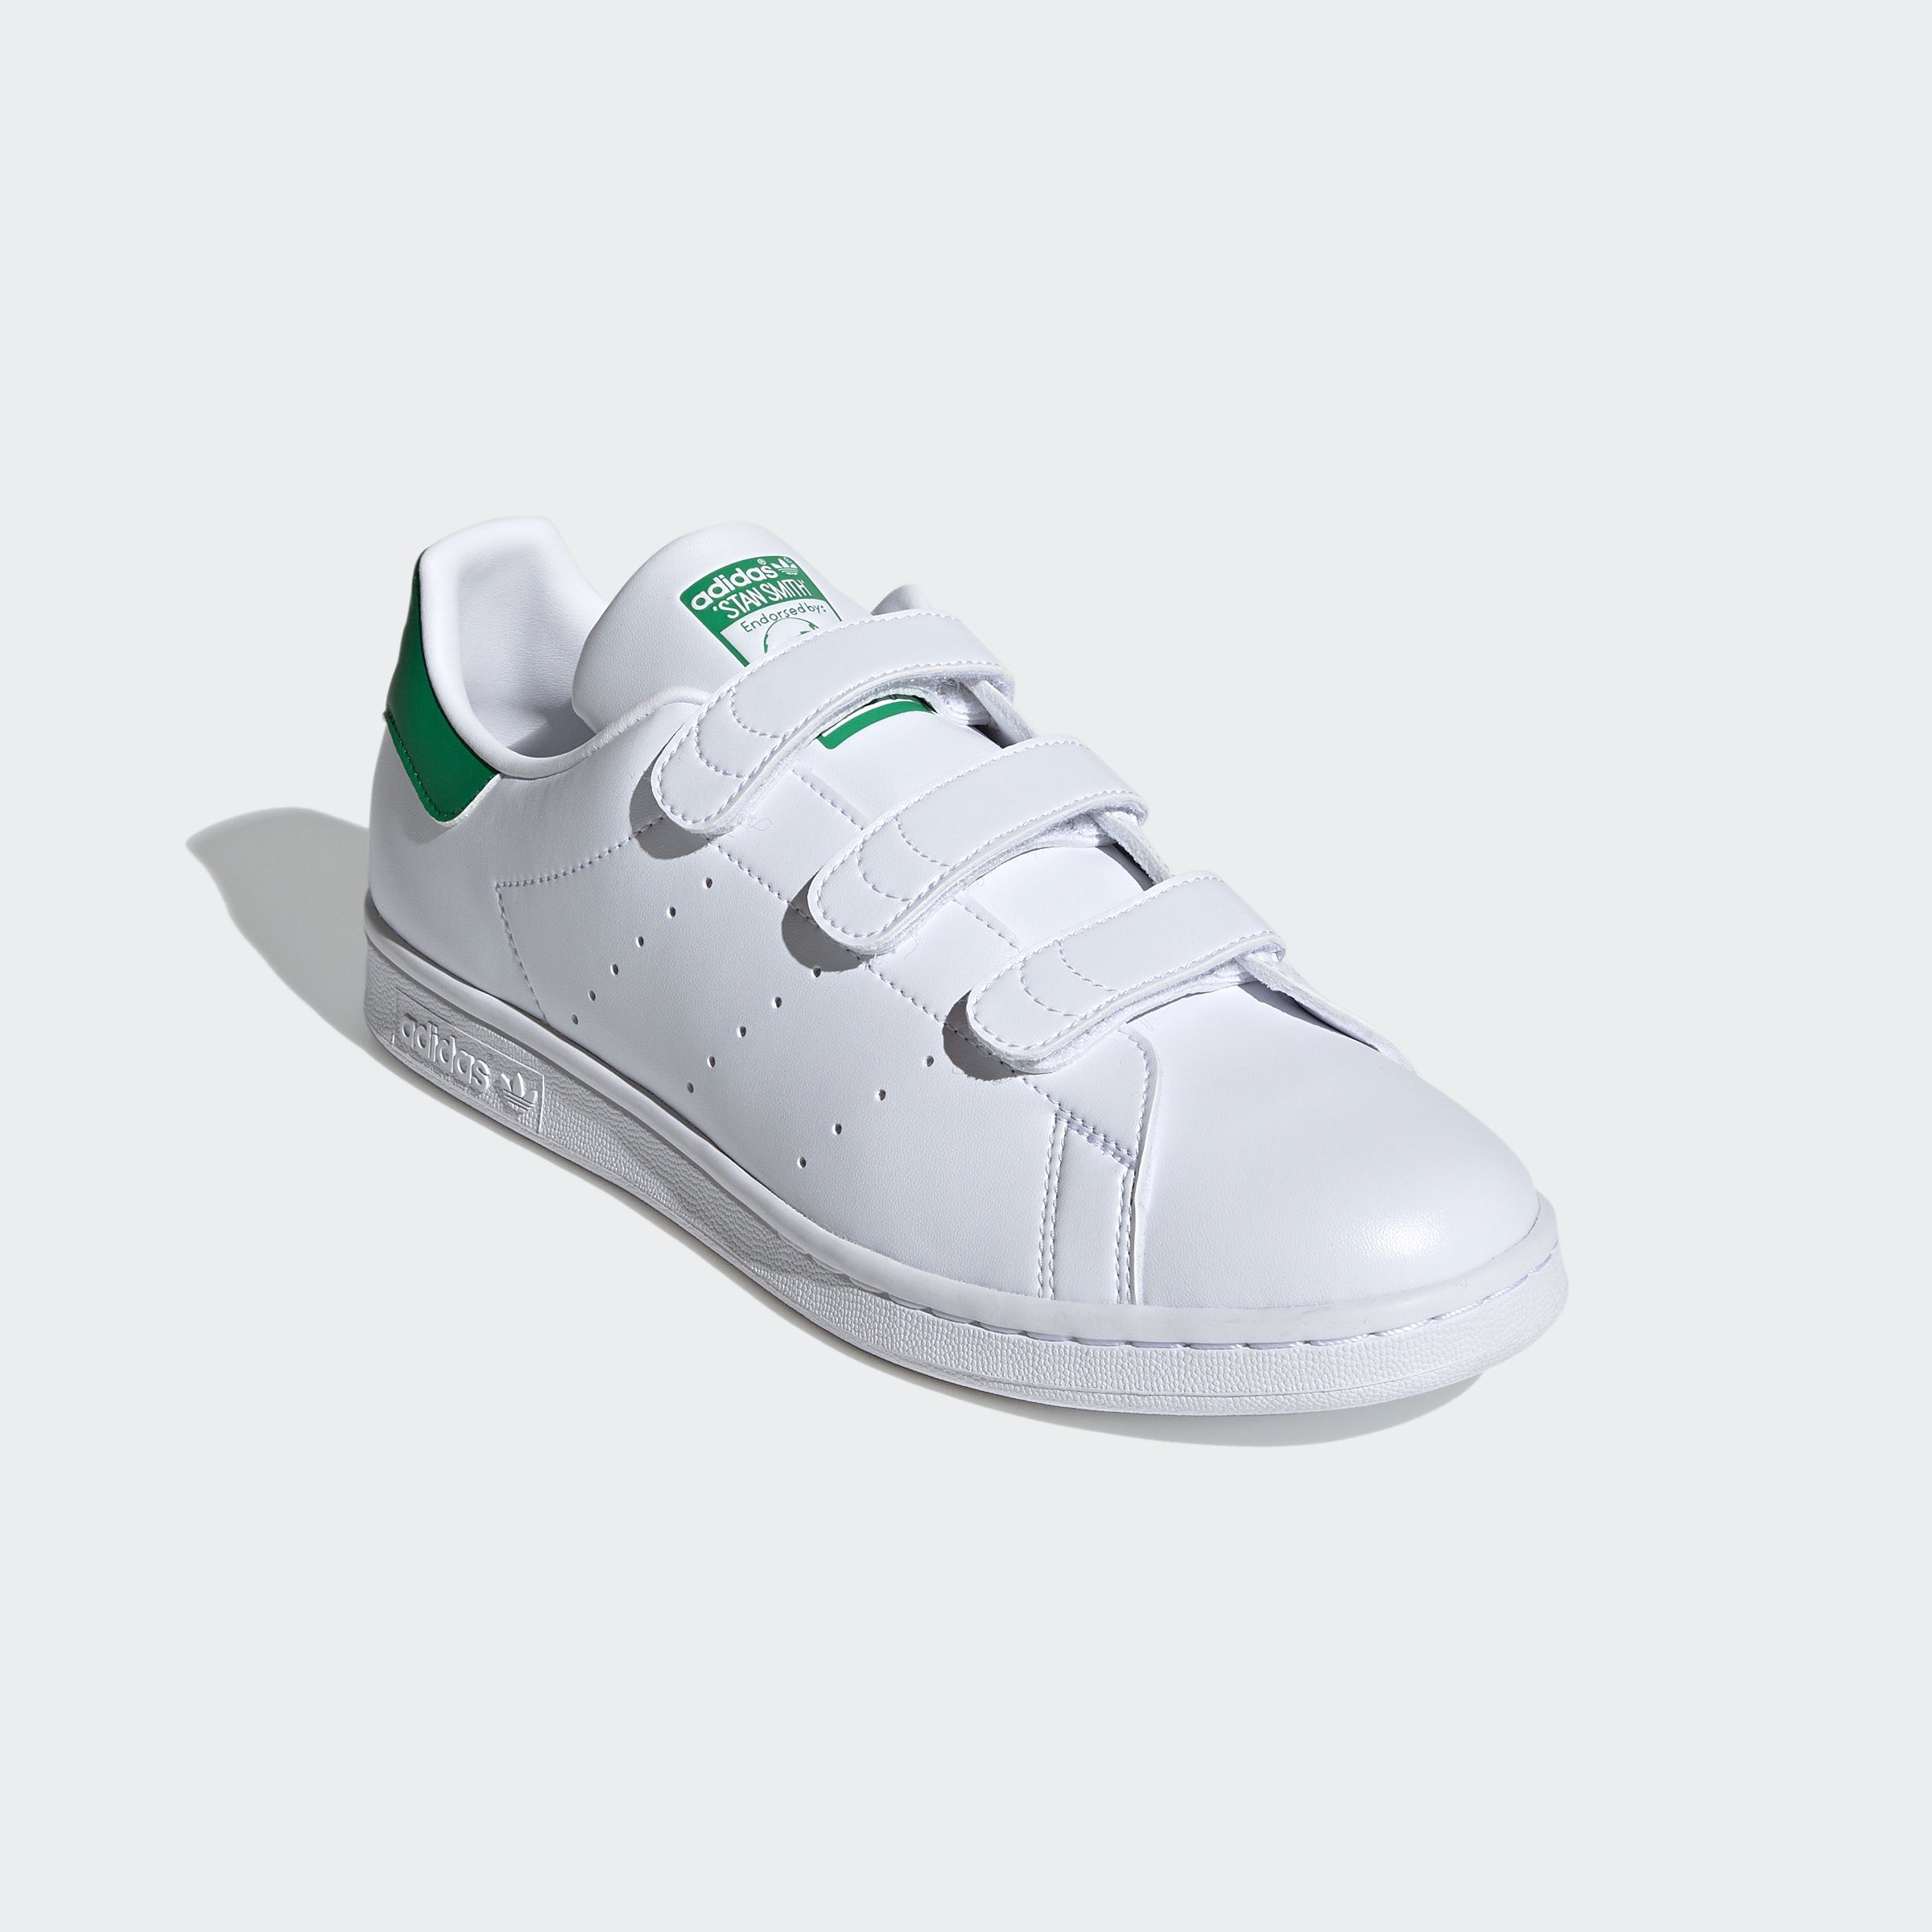 Cloud Sneaker / SMITH / Green STAN Cloud White adidas White Originals